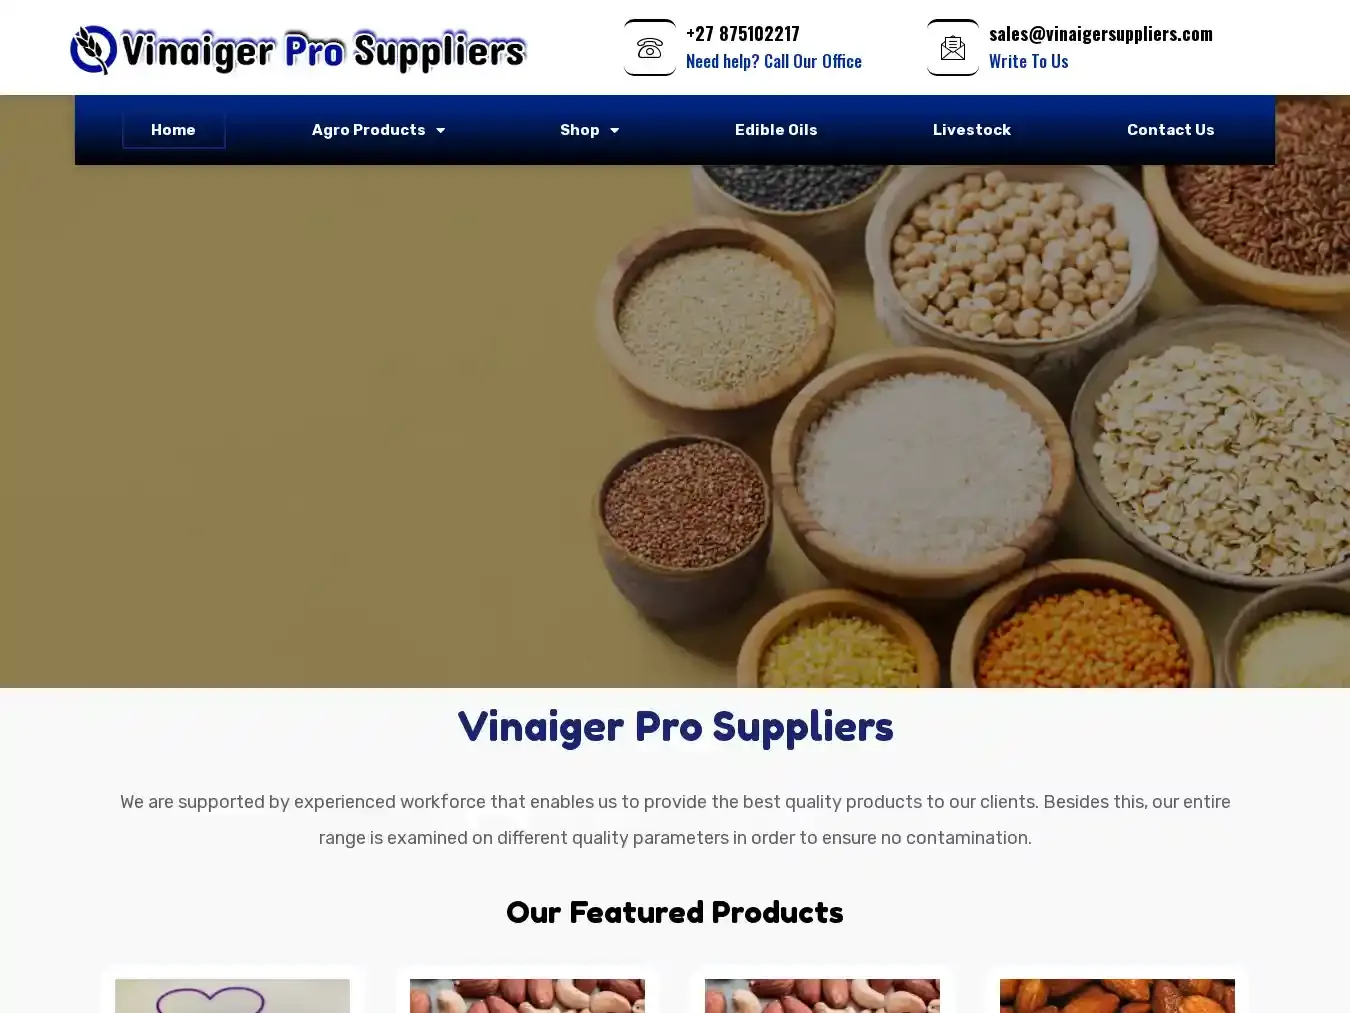 Vinaigerprosuppliers.com Fraudulent Non-Delivery website.